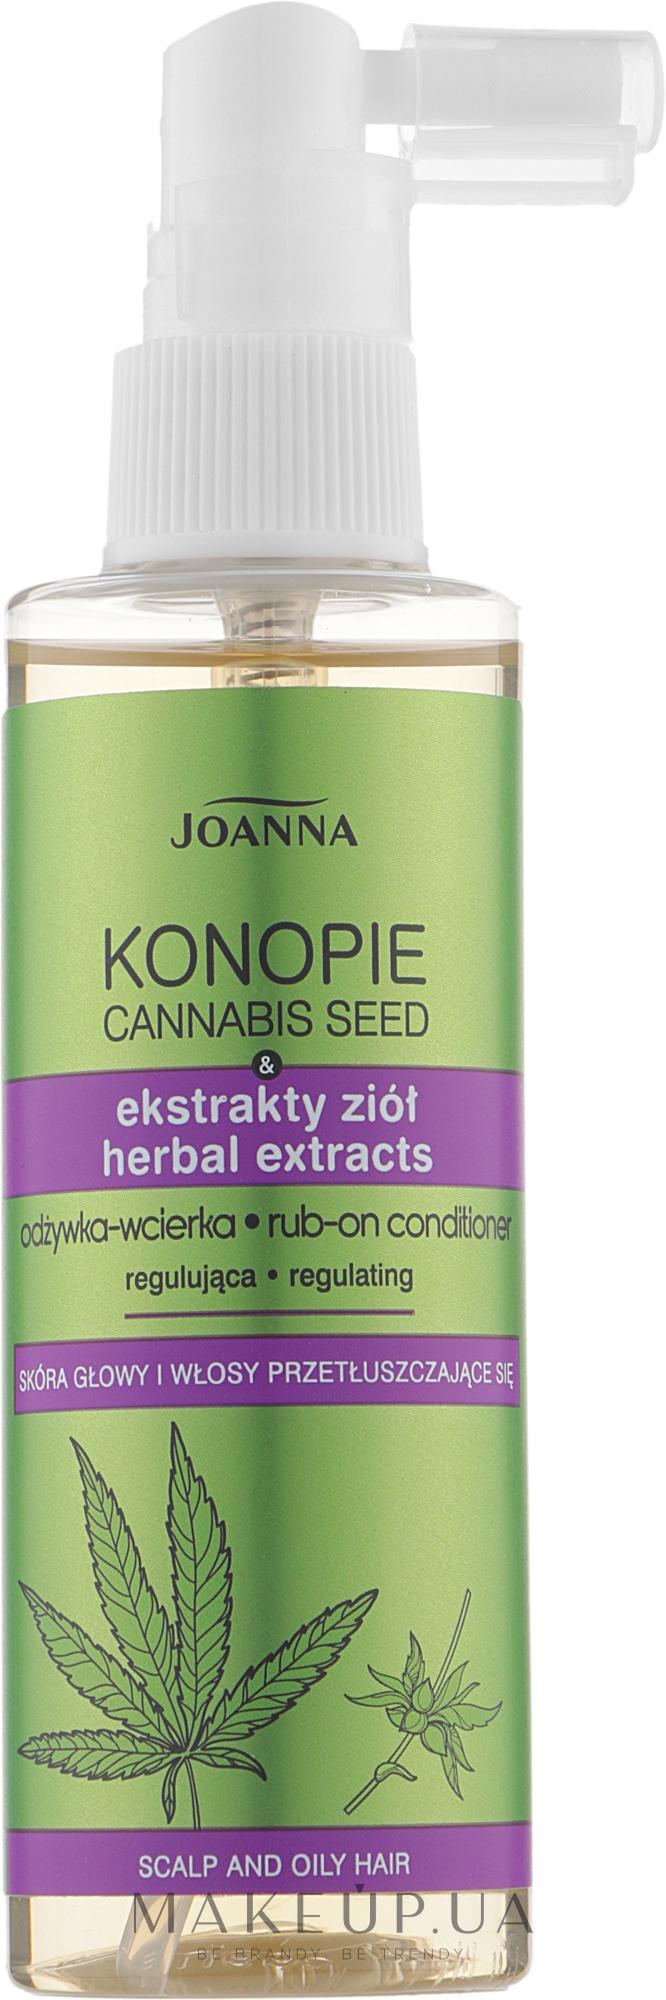 Лосьон-кондиционер для жирных волос - Joanna Cannabis Seed Herbal Extracts Rub-on Conditioner — фото 100ml